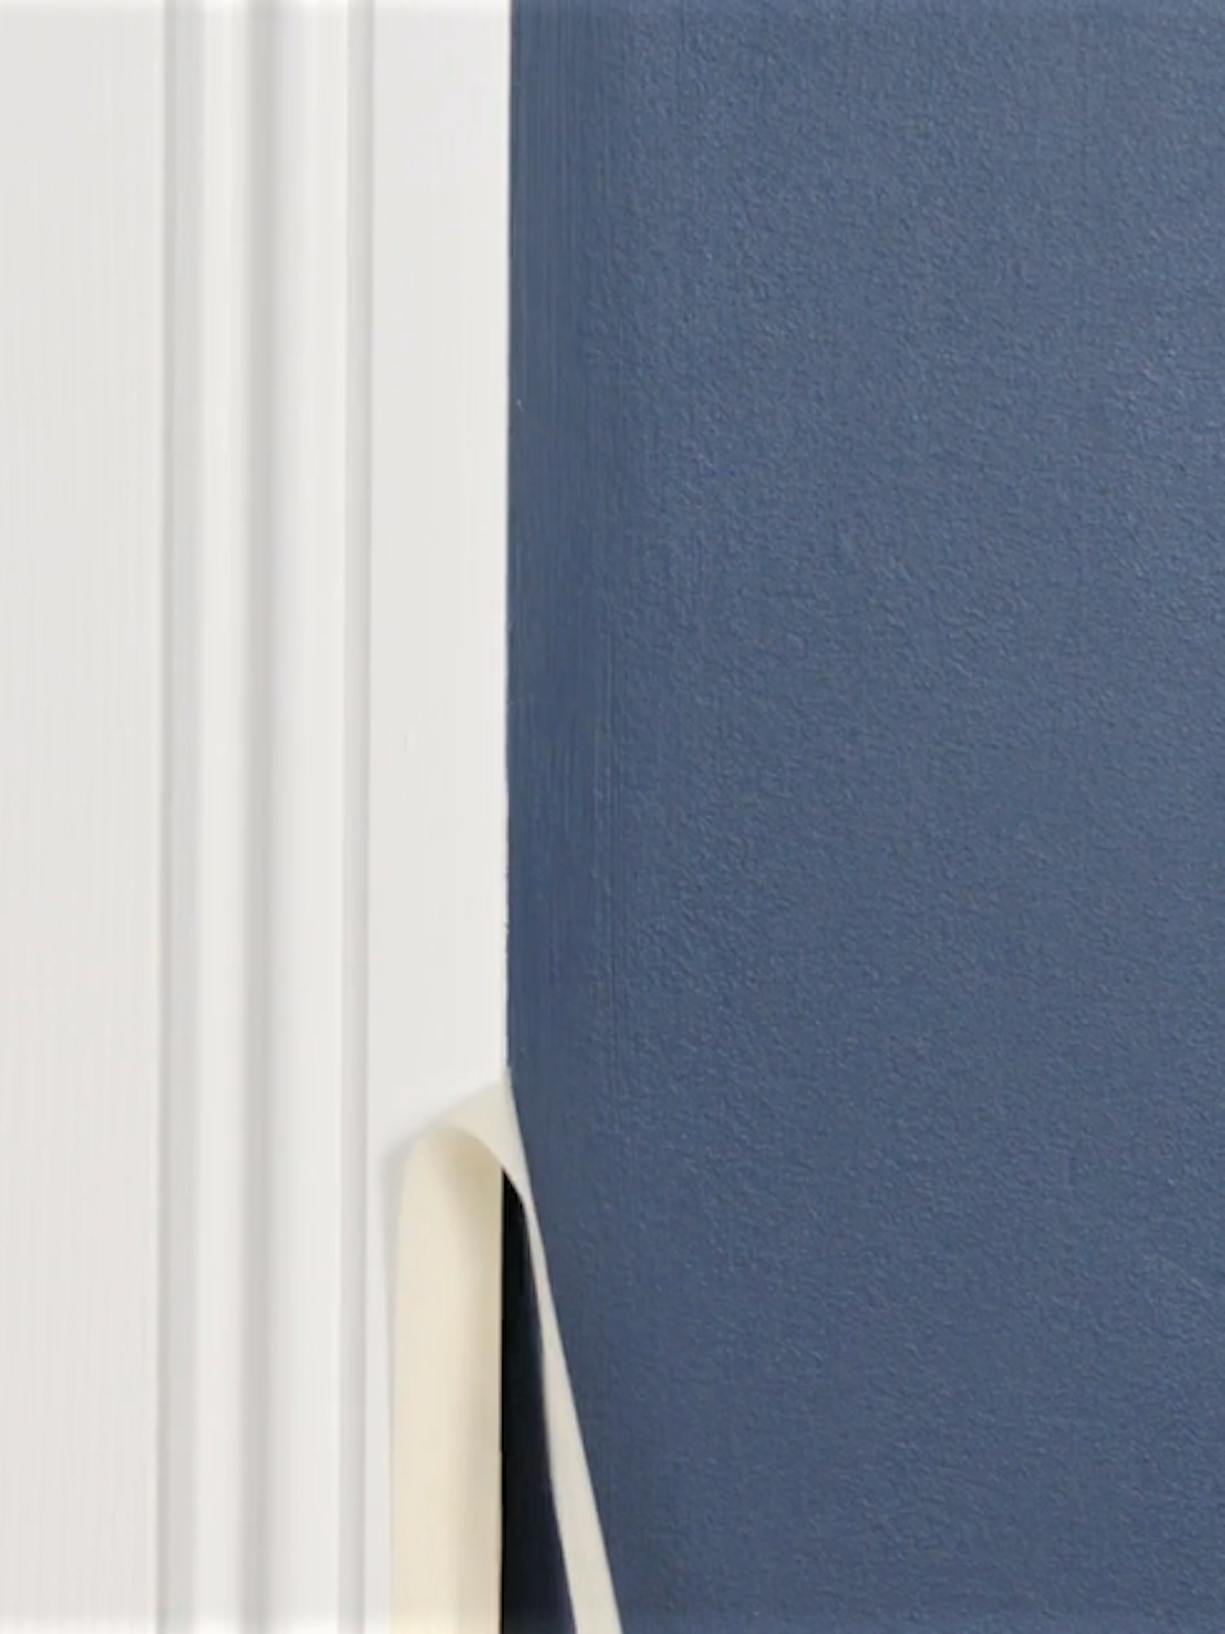 How to prep your walls | Removing masking tape | Tikkurila UK